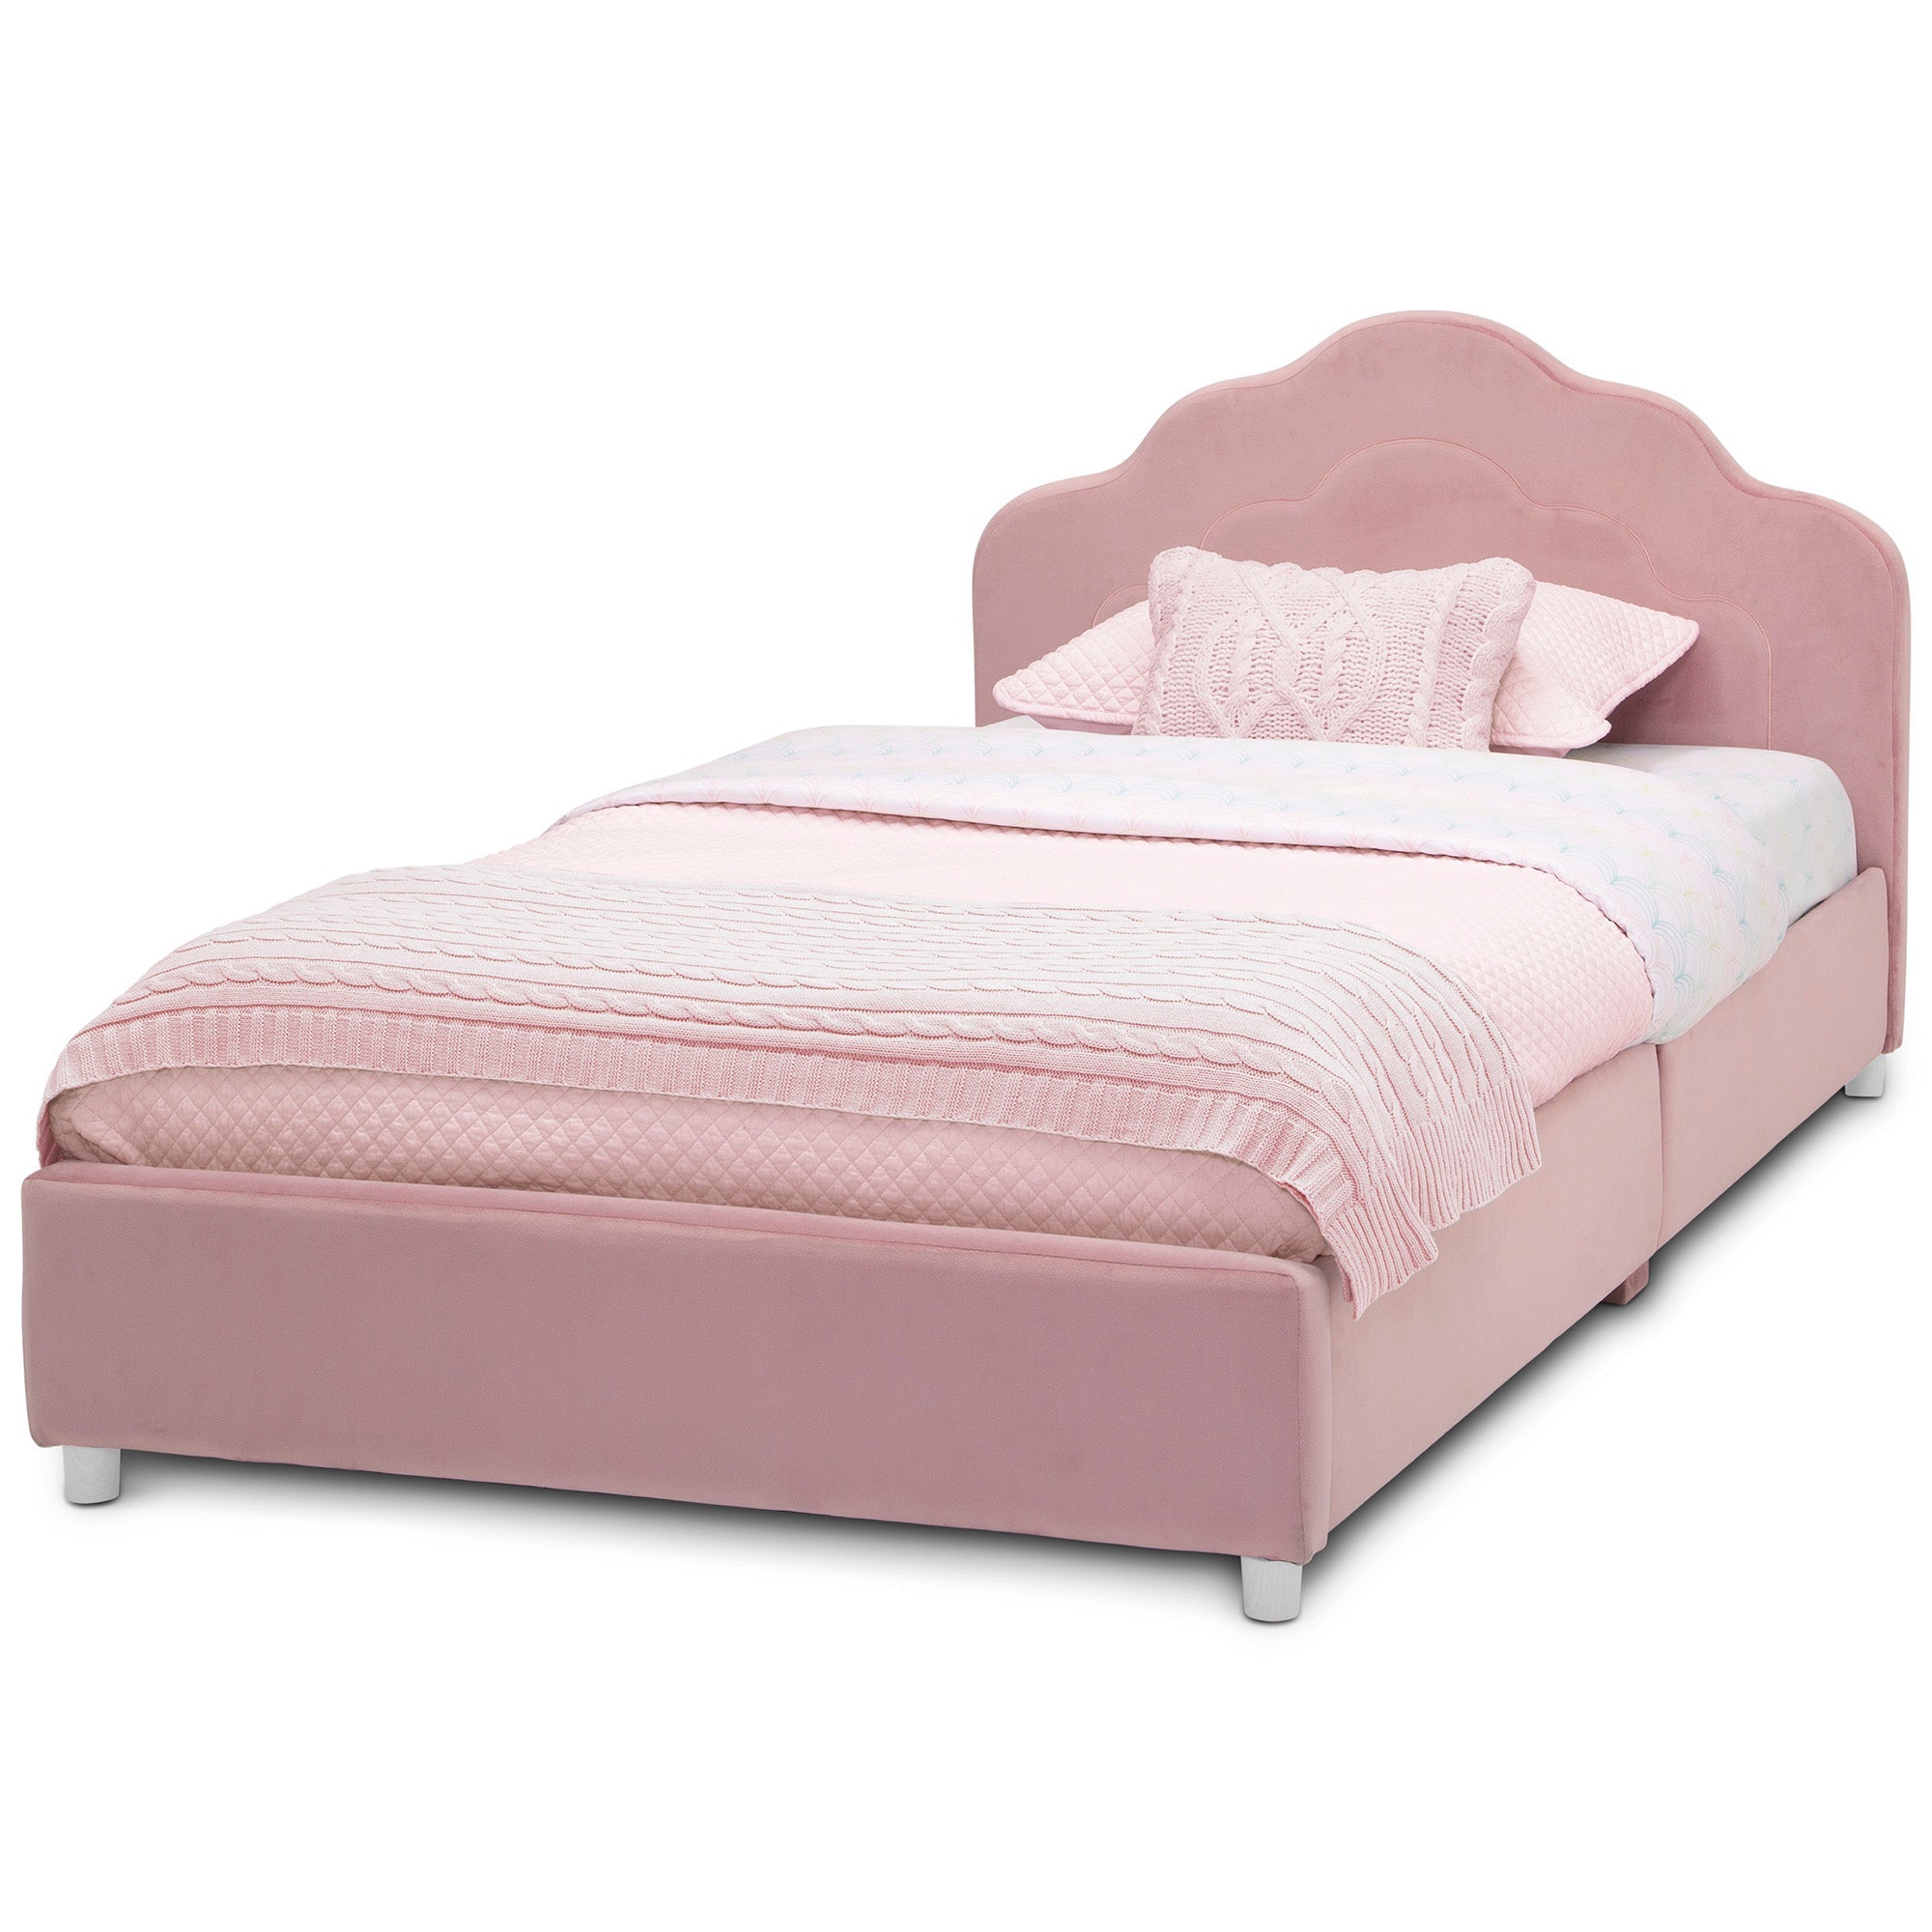 Delta Children Comfort Wood Upholstered Bed, Twin, Rose Pink